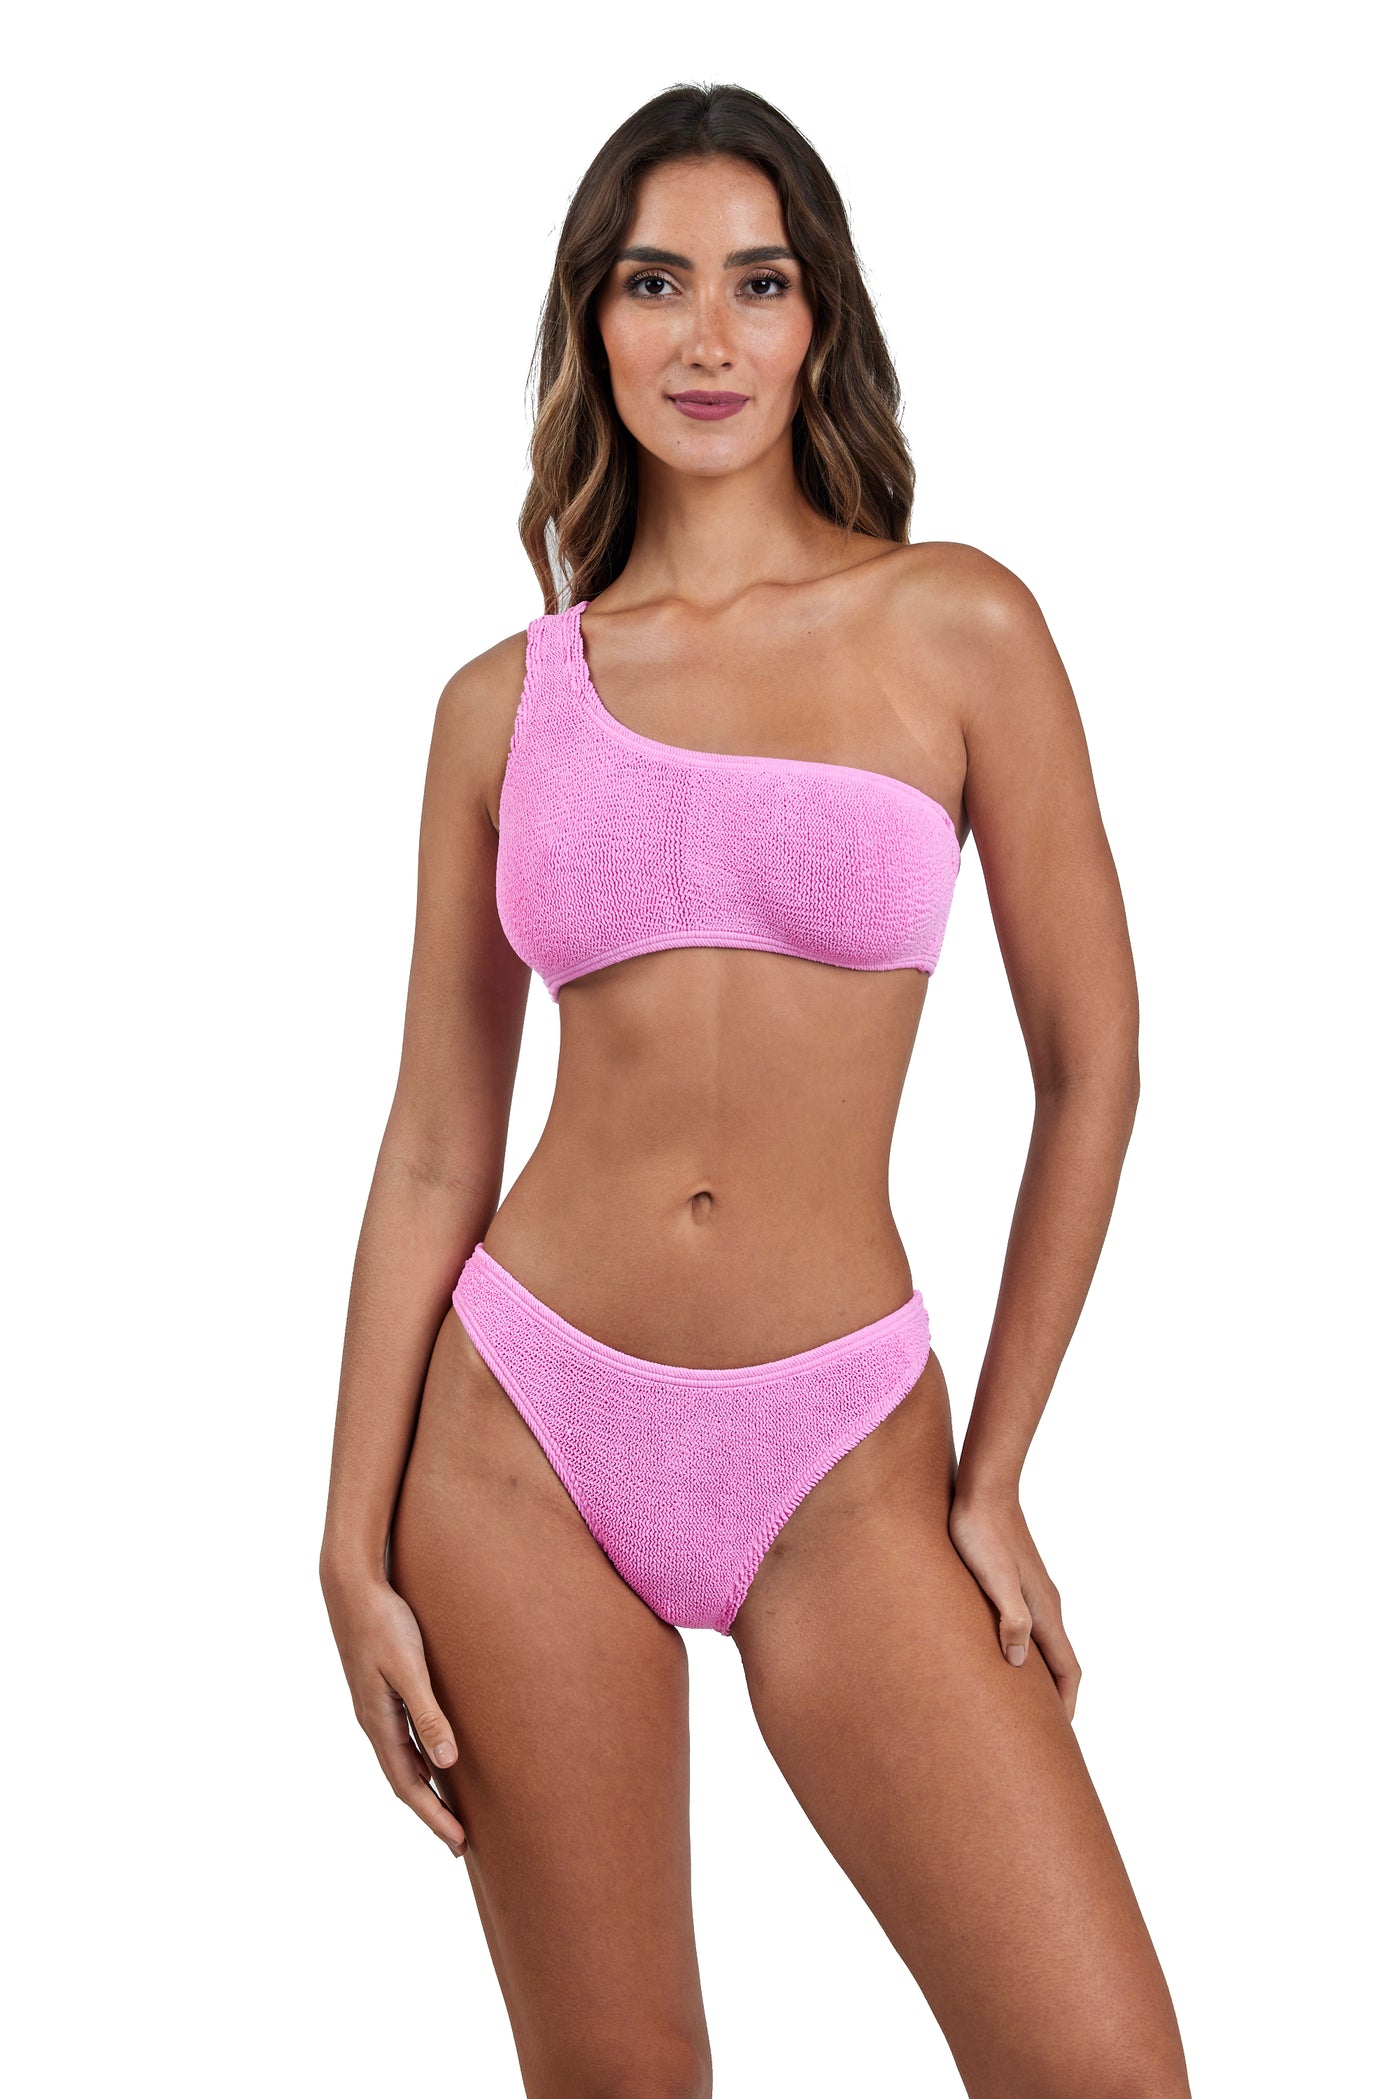 Bora Bora One Shoulder One Size Bikini TOP ONLY (Rose Pink)